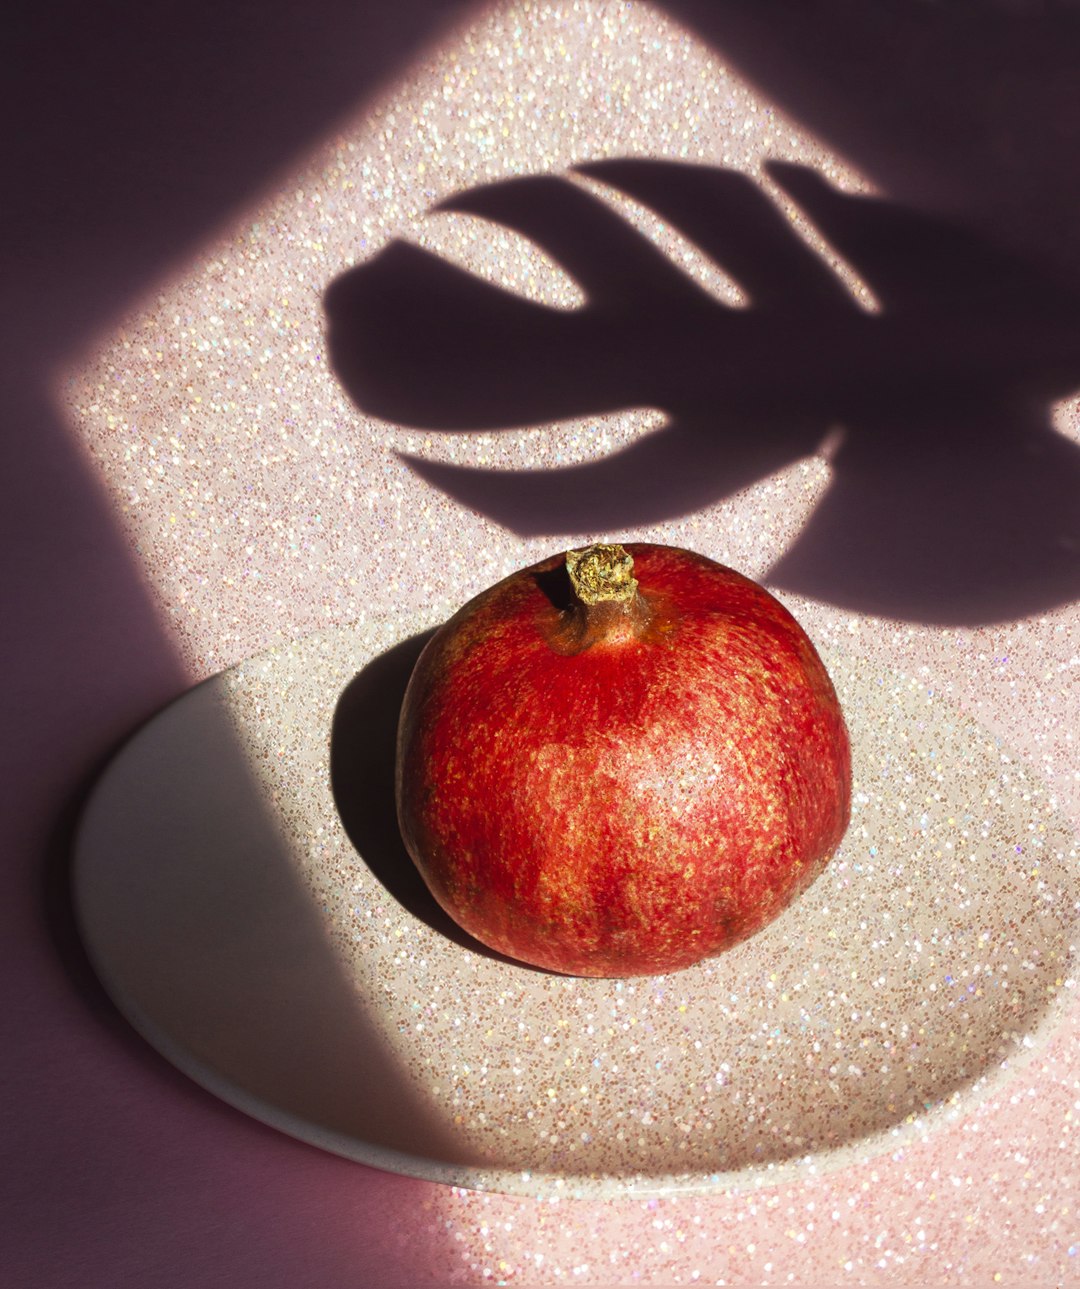 red apple fruit on white textile